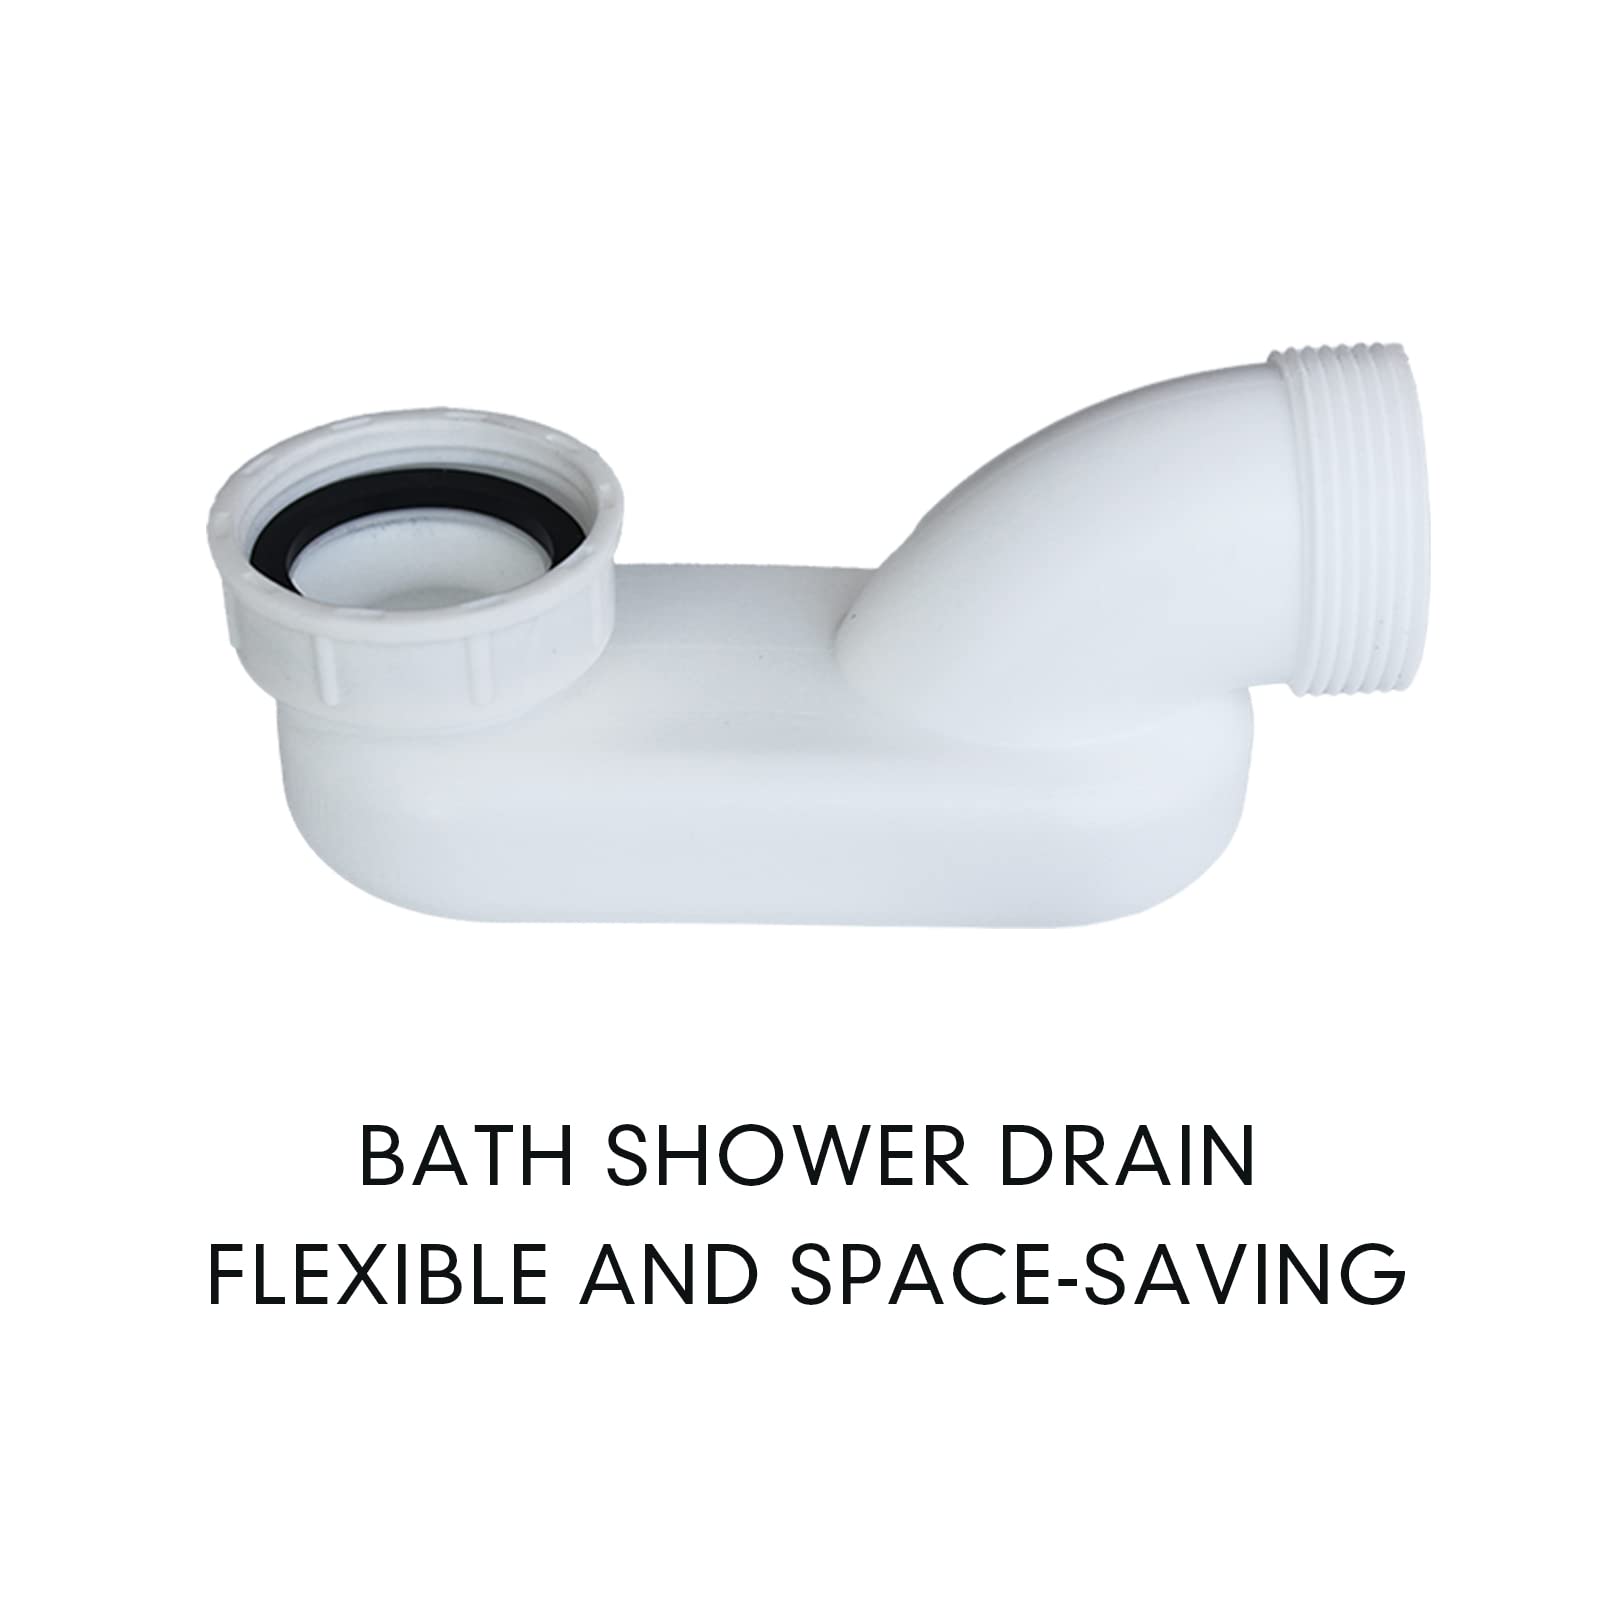 Bathtub Shower Drain Pipe, Low Profile Flat 1 1/2 P Trap Kit, Flexible Freestanding Tub Drain for Bath